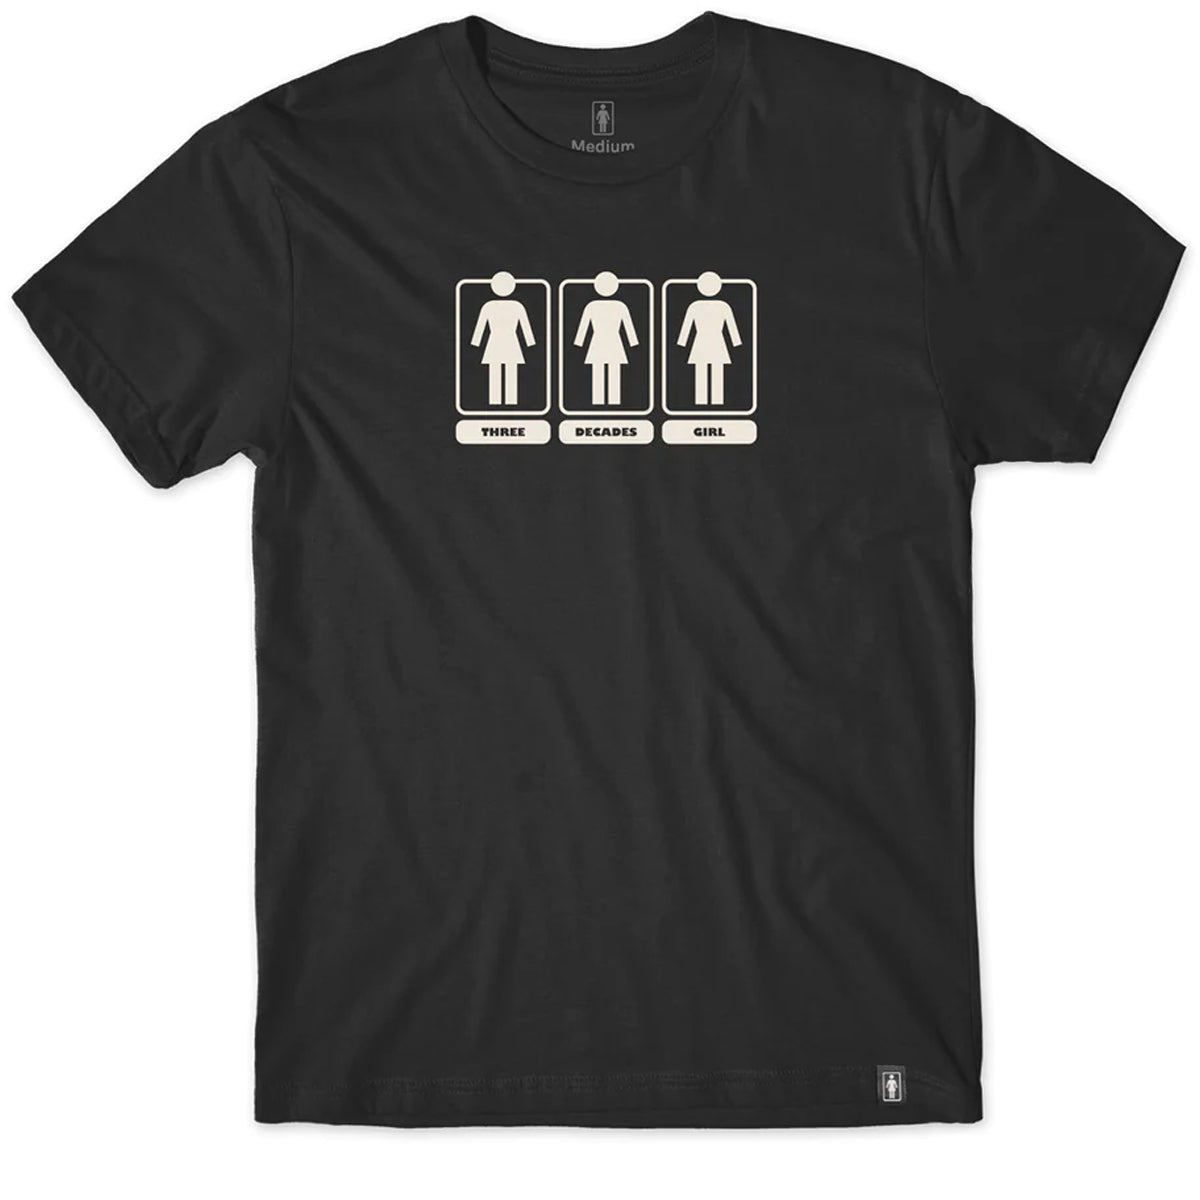 Girl Three Decades OG T-Shirt - Black image 1